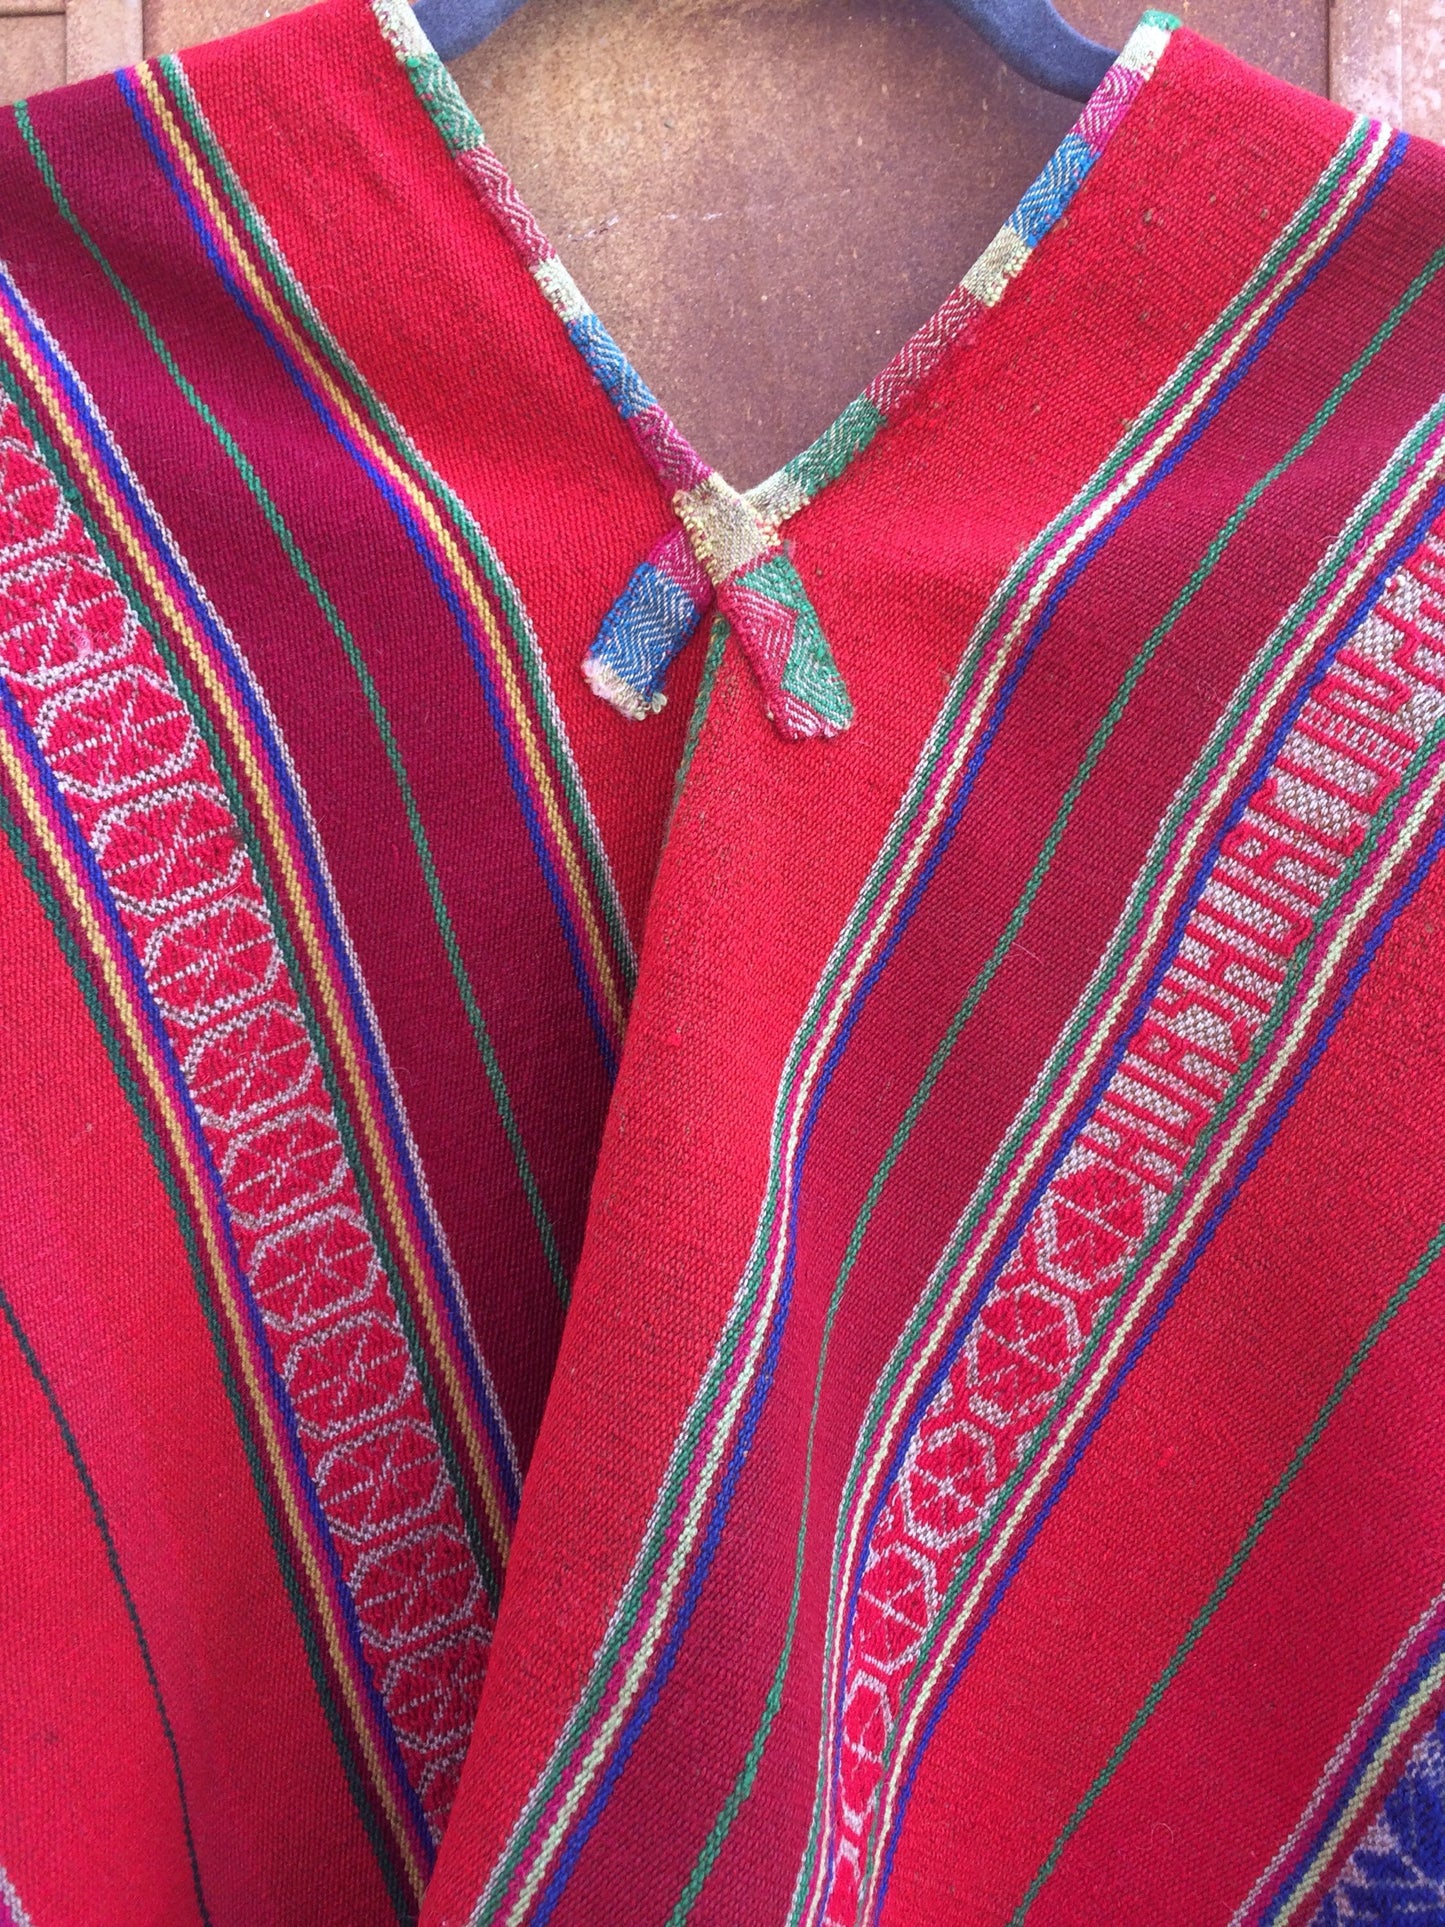 Vintage Handloomed Boho Multi Colored Poncho